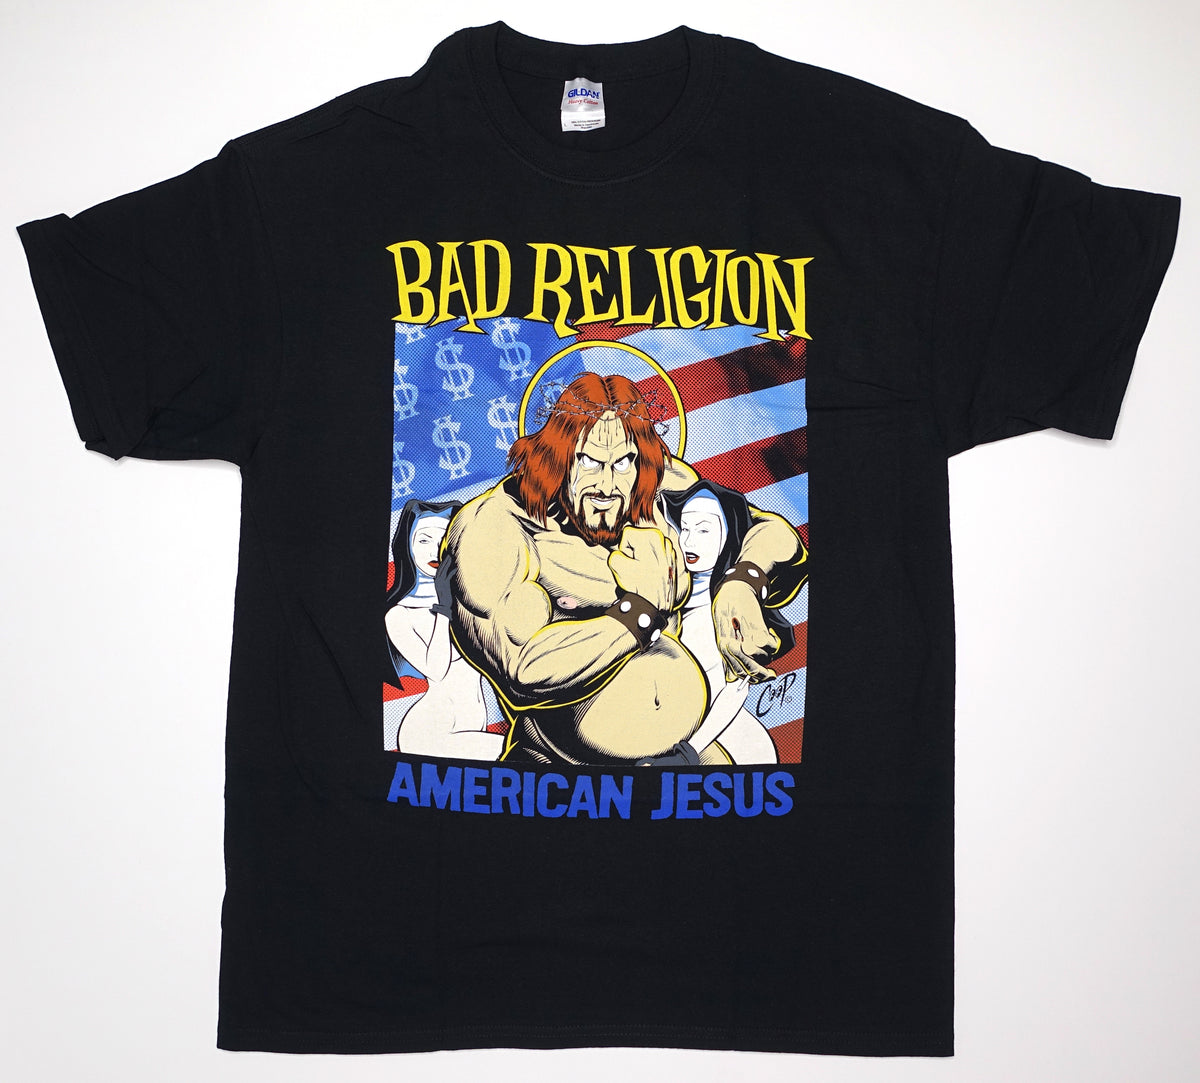 BAD RELIGION / AMERICAN JESUS VINTAGE T-